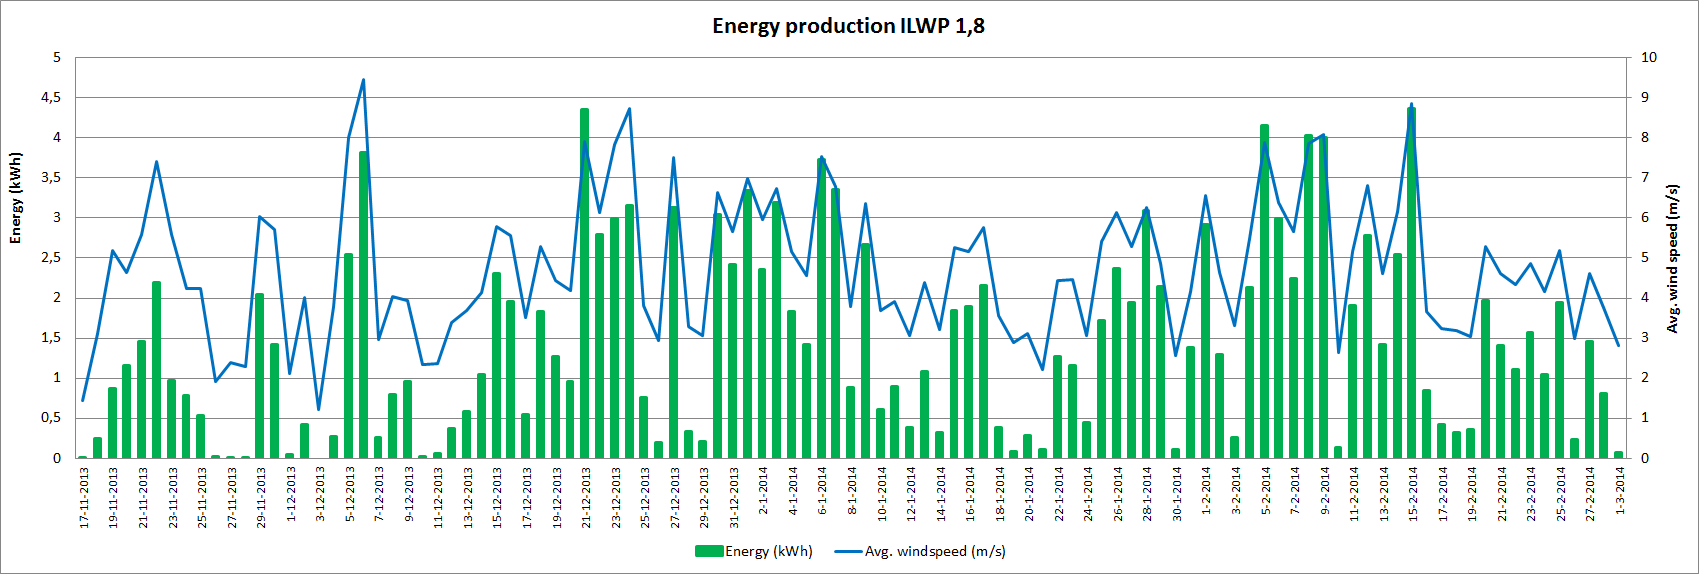 ILWP 1,8 energy total